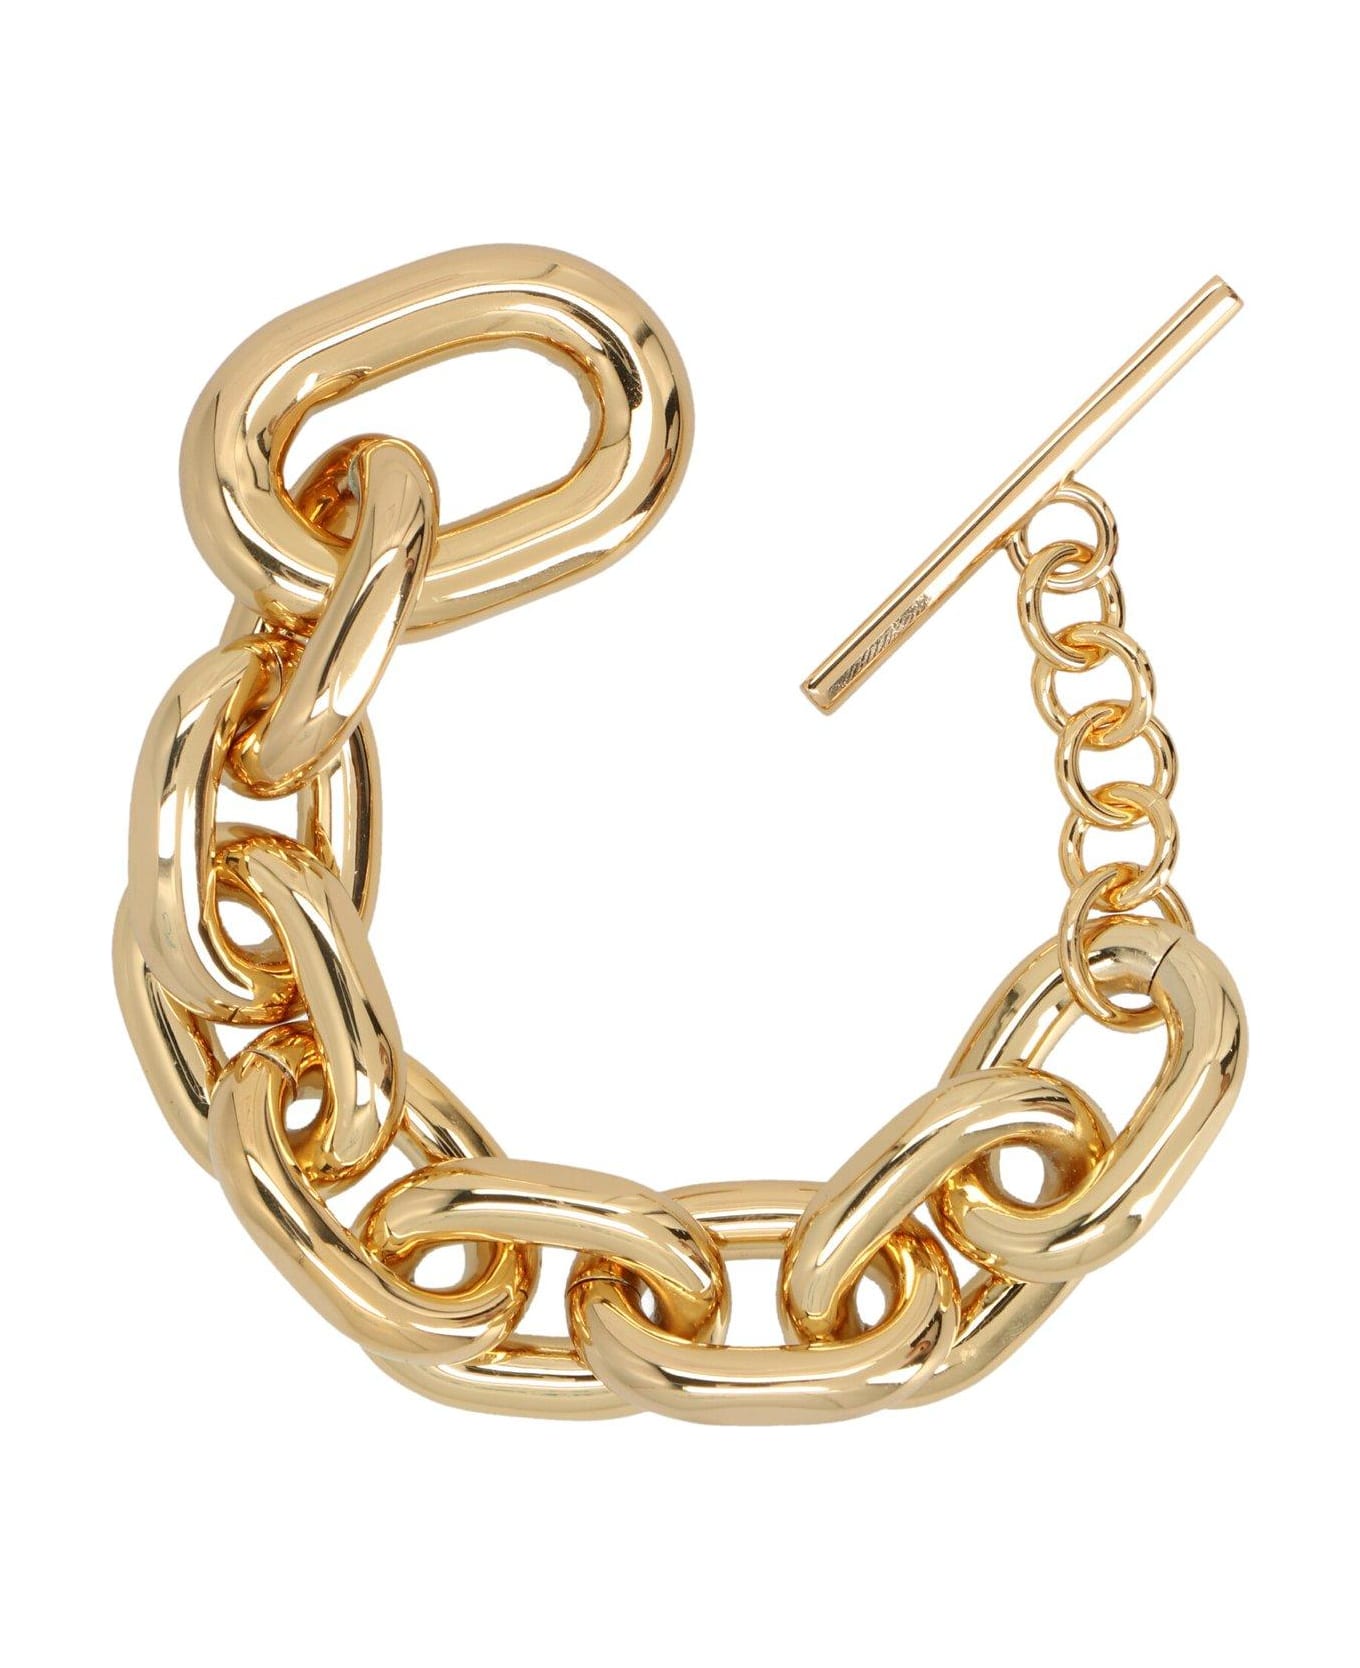 Paco Rabanne Chain Bracelet - Metallic